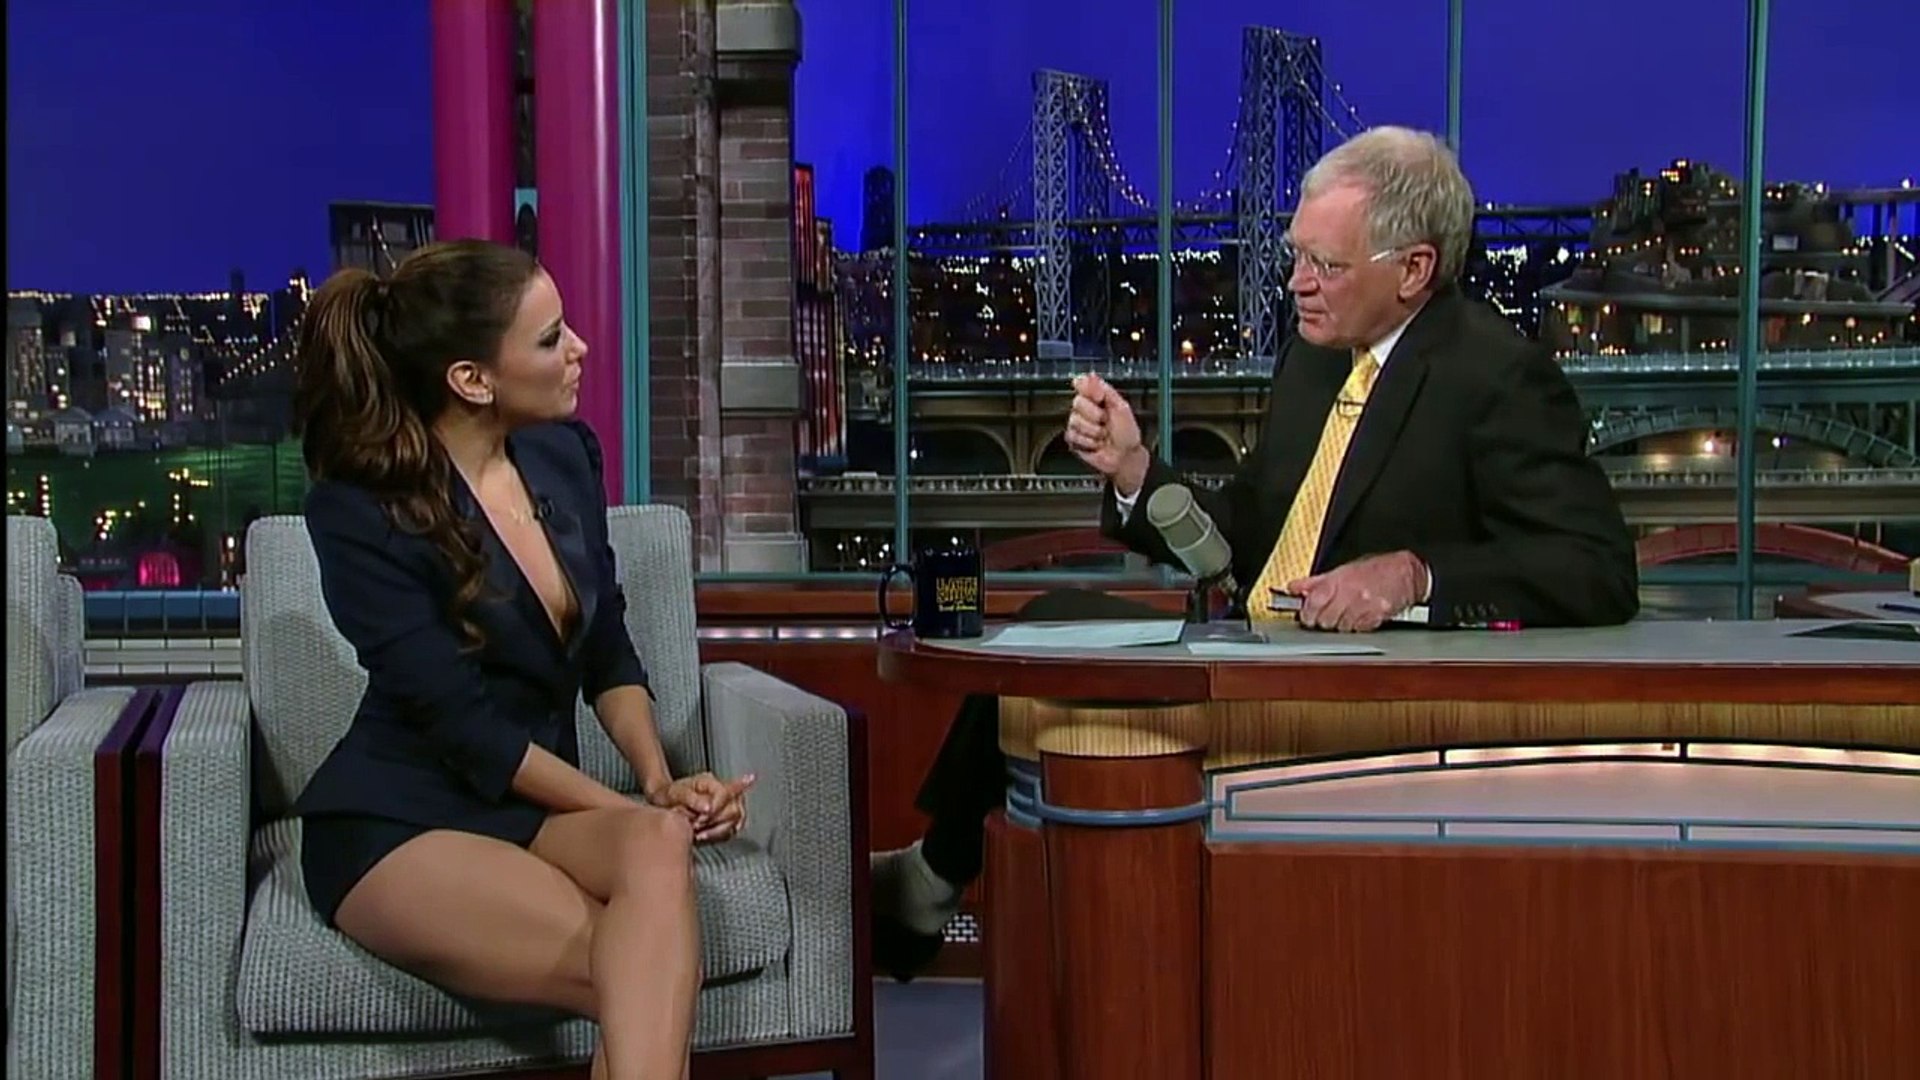 FULL] Eva Longoria Wardrobe Malfunction on David Letterman Show -  Dailymotion Video